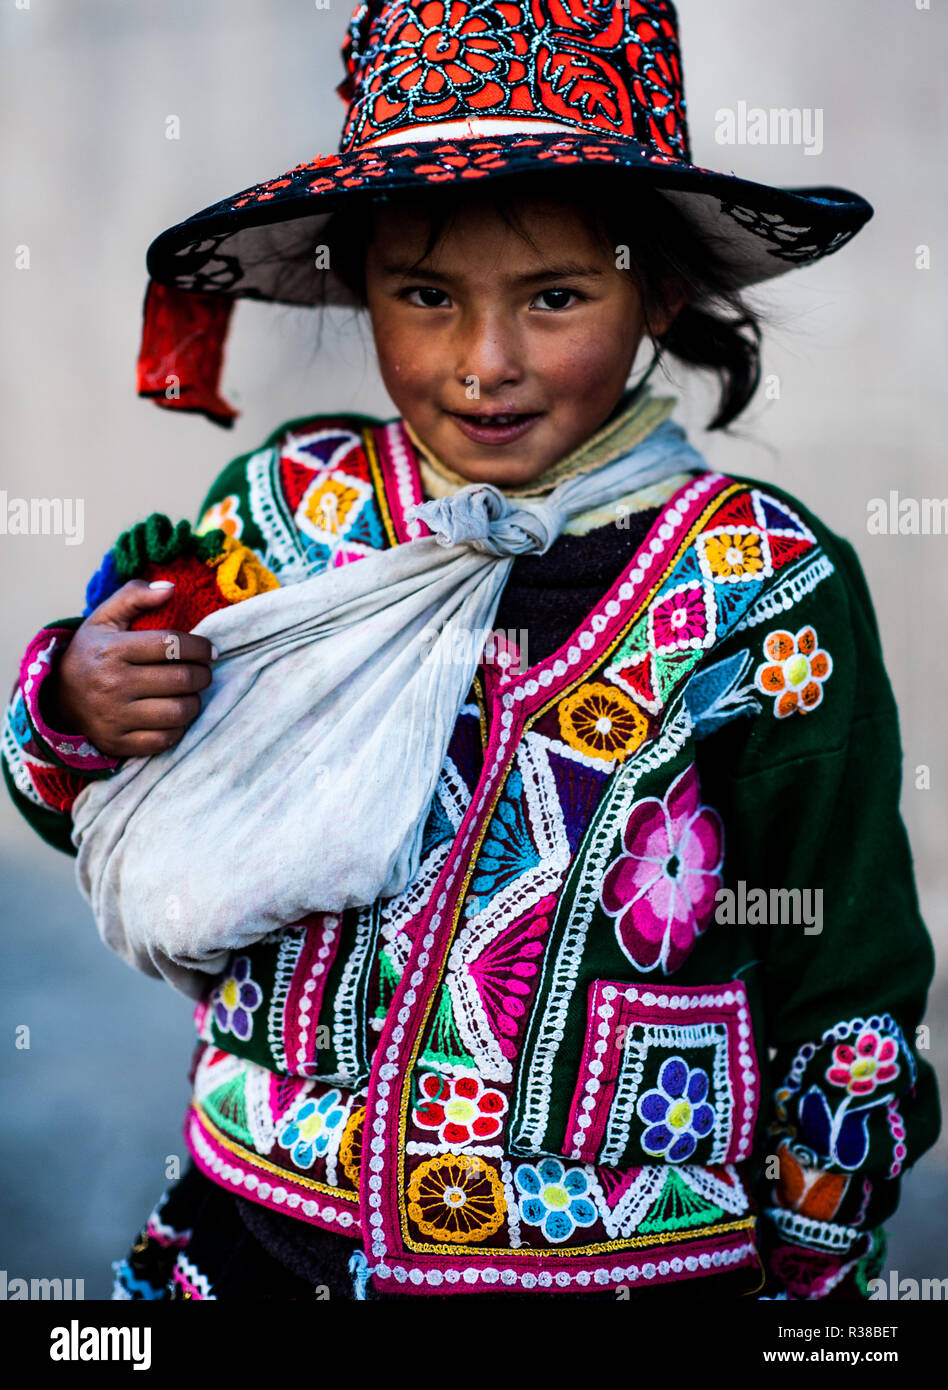 Peruvian Girl In Traditional Dress A Posing For A Photo In Cusco Peru South America Stock